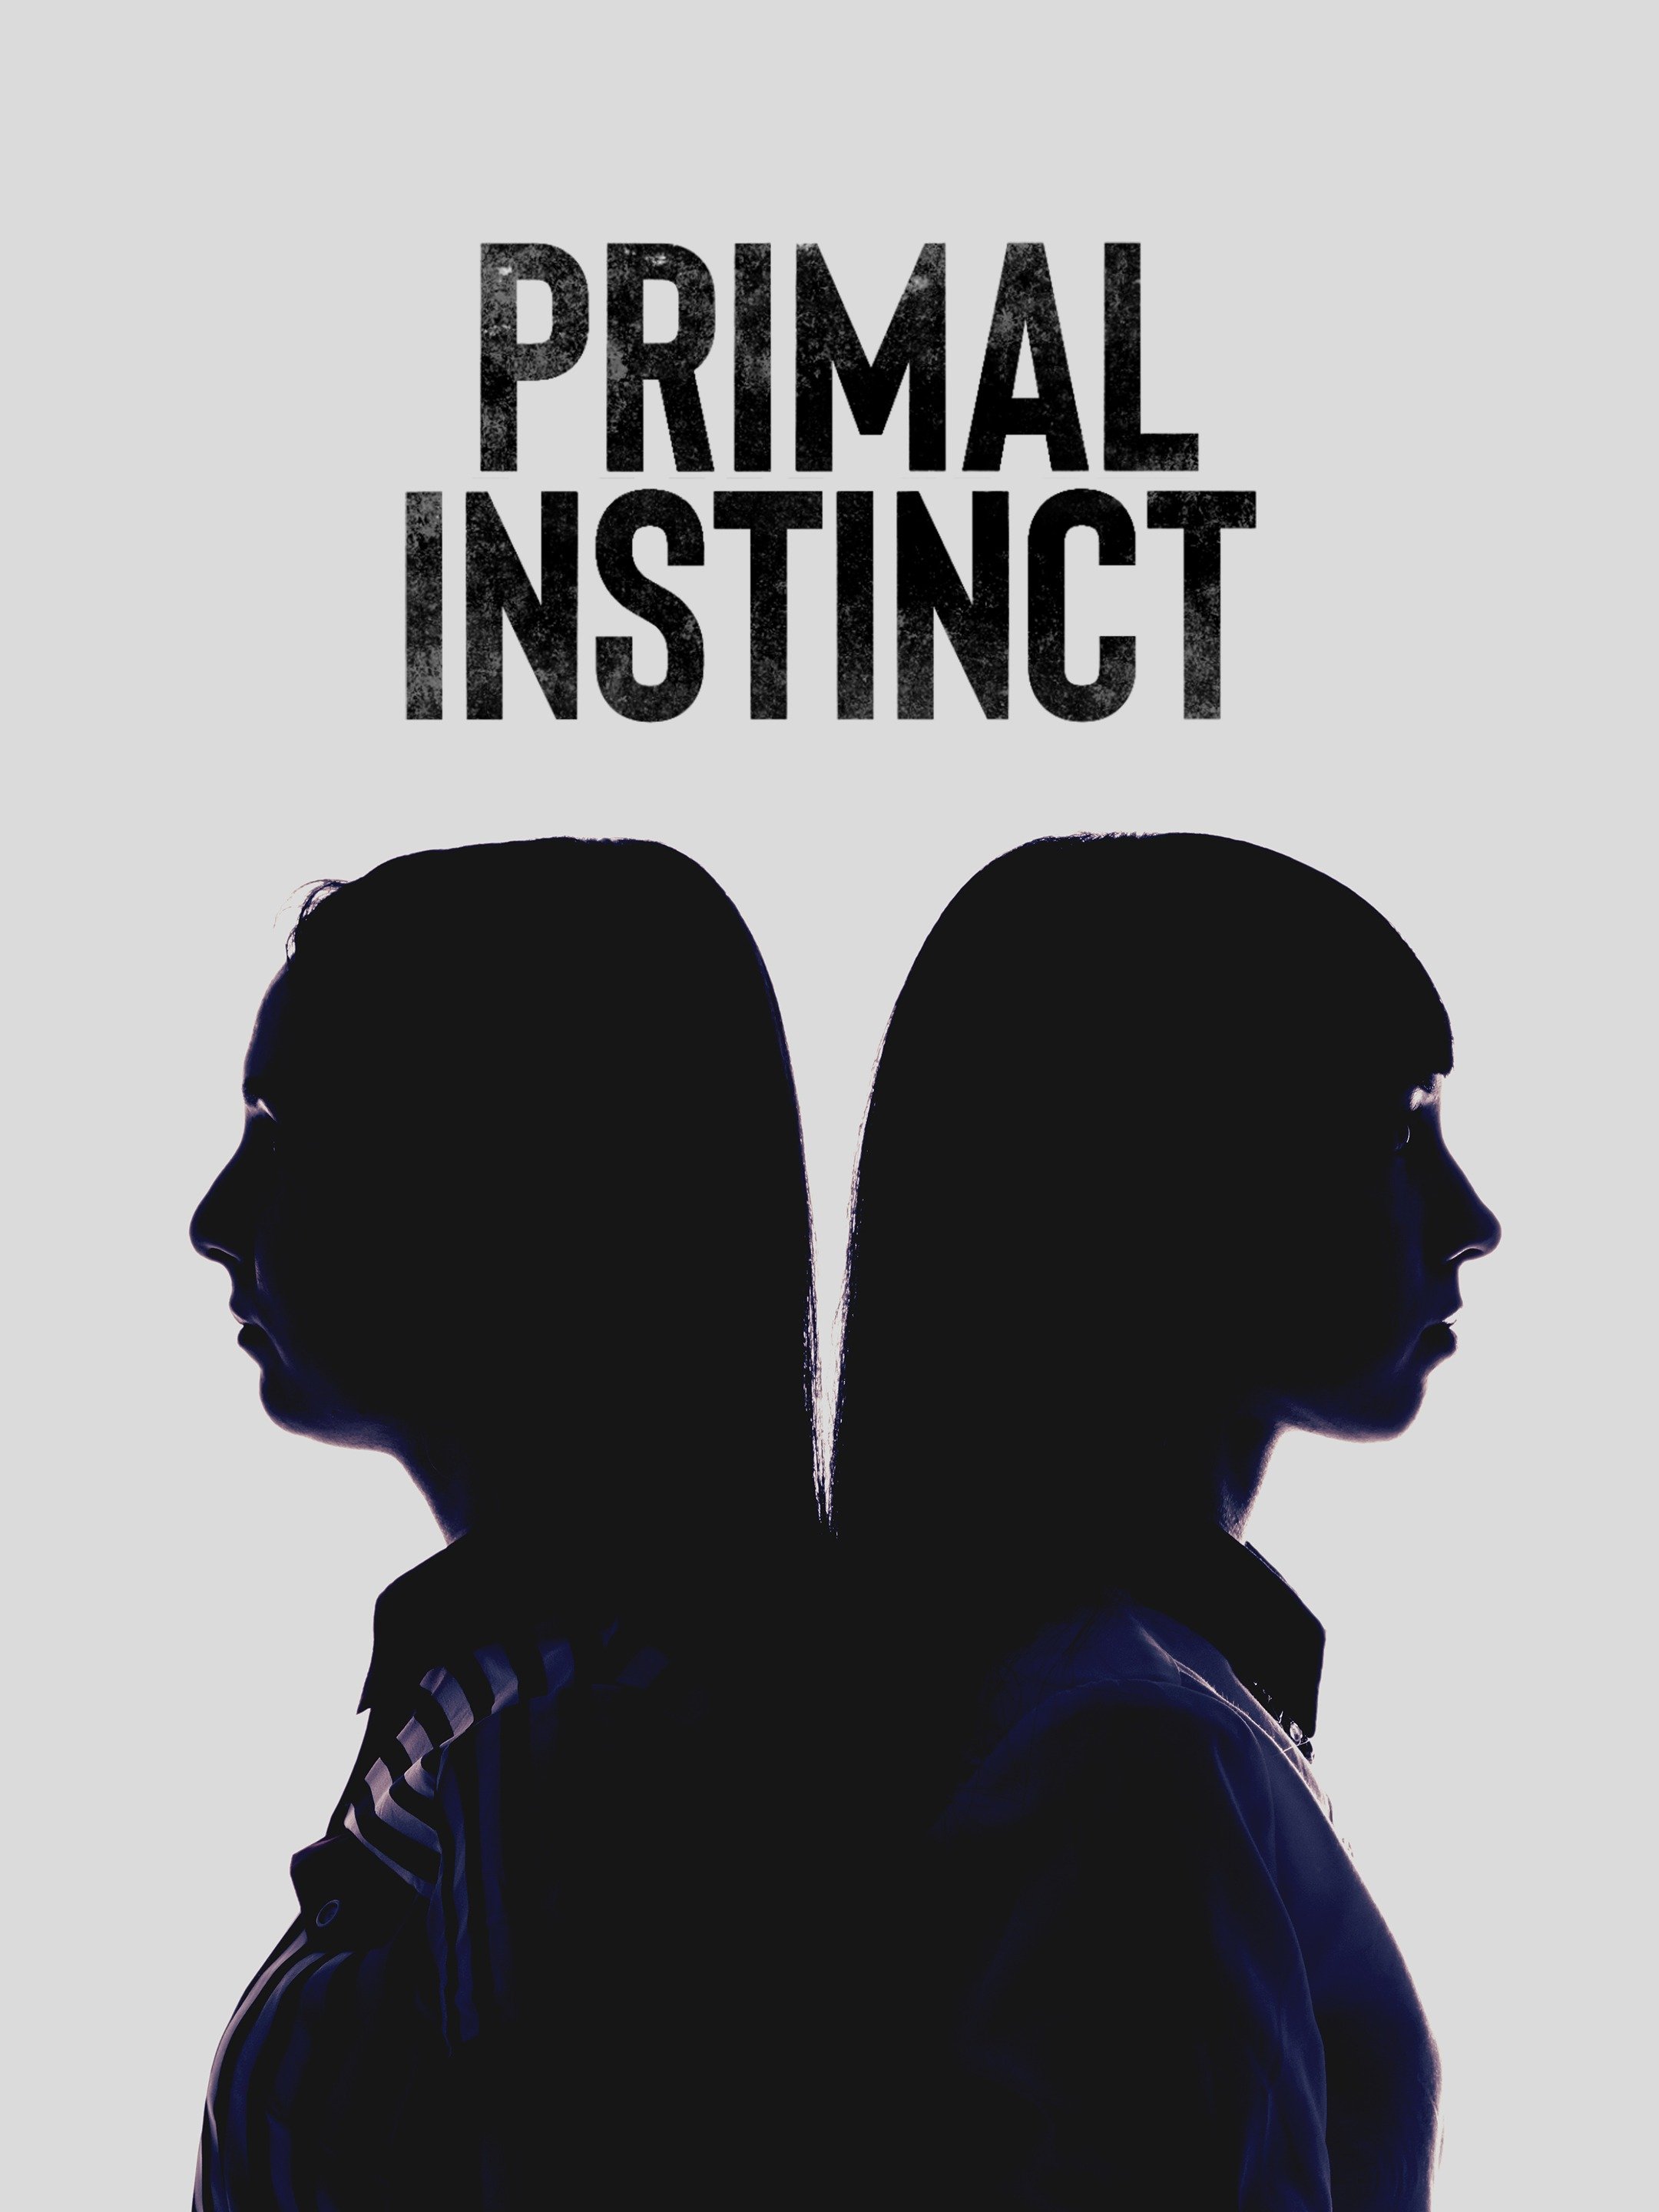 primal instinct movie